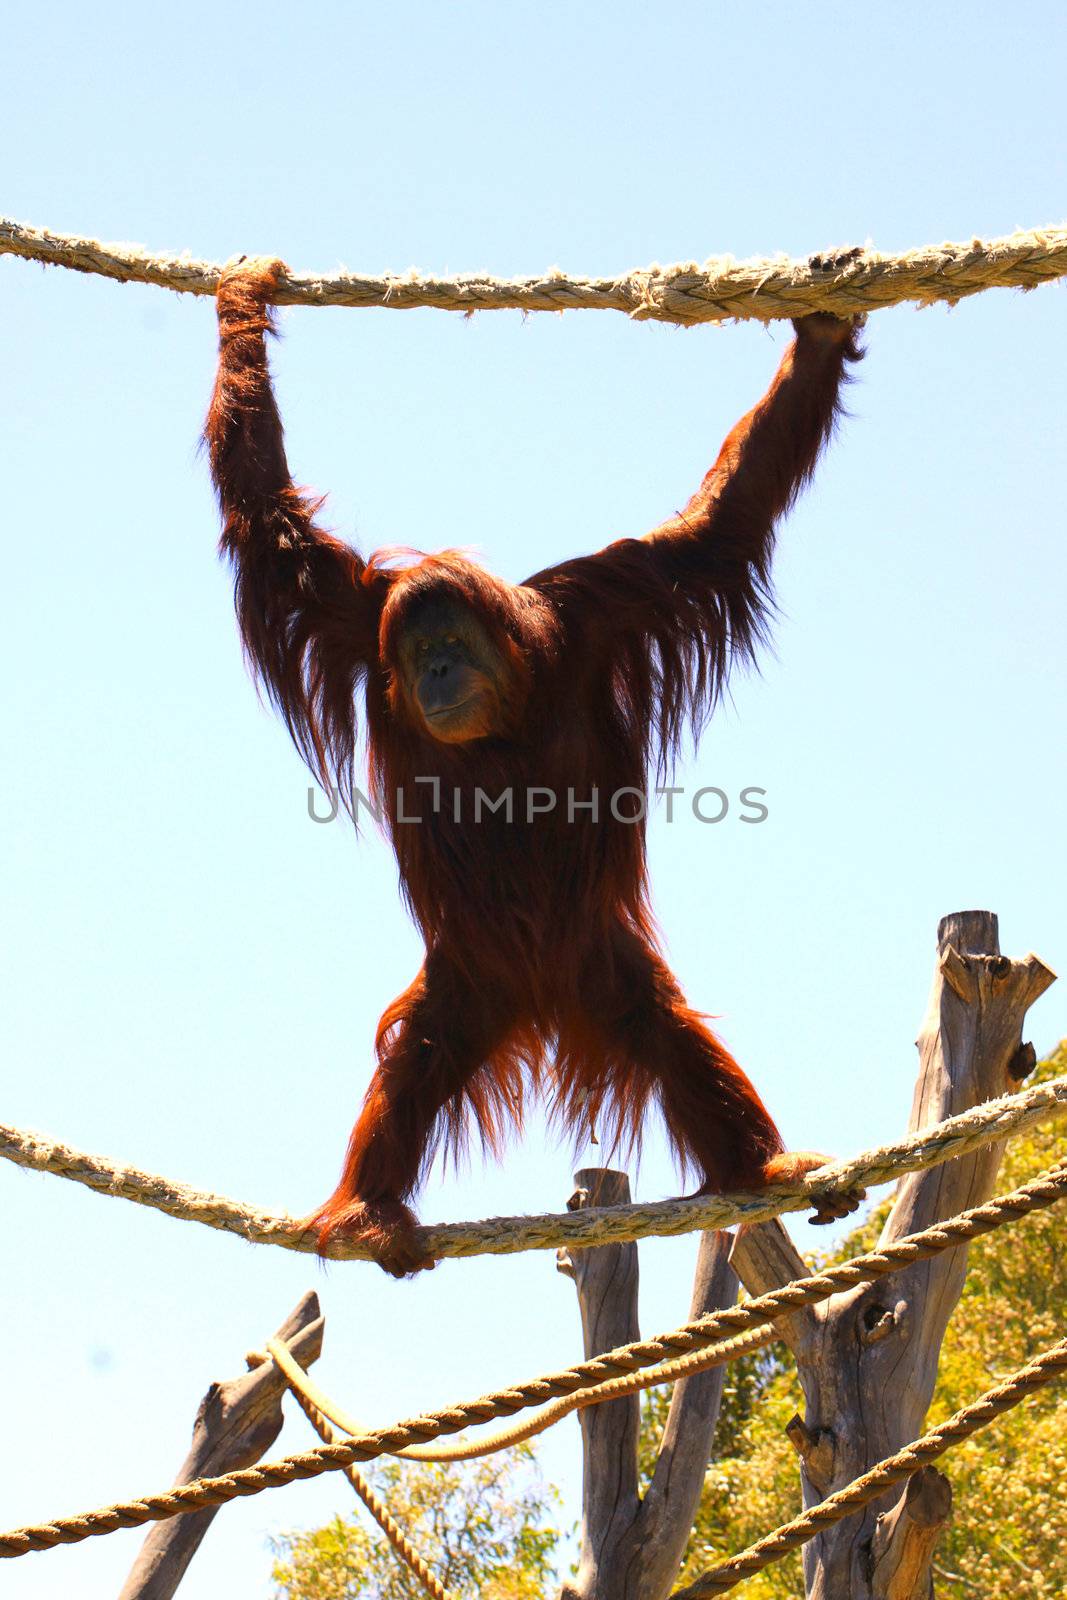 Karta, the Sumatron Orangutan. Adelaide Zoo, Australia